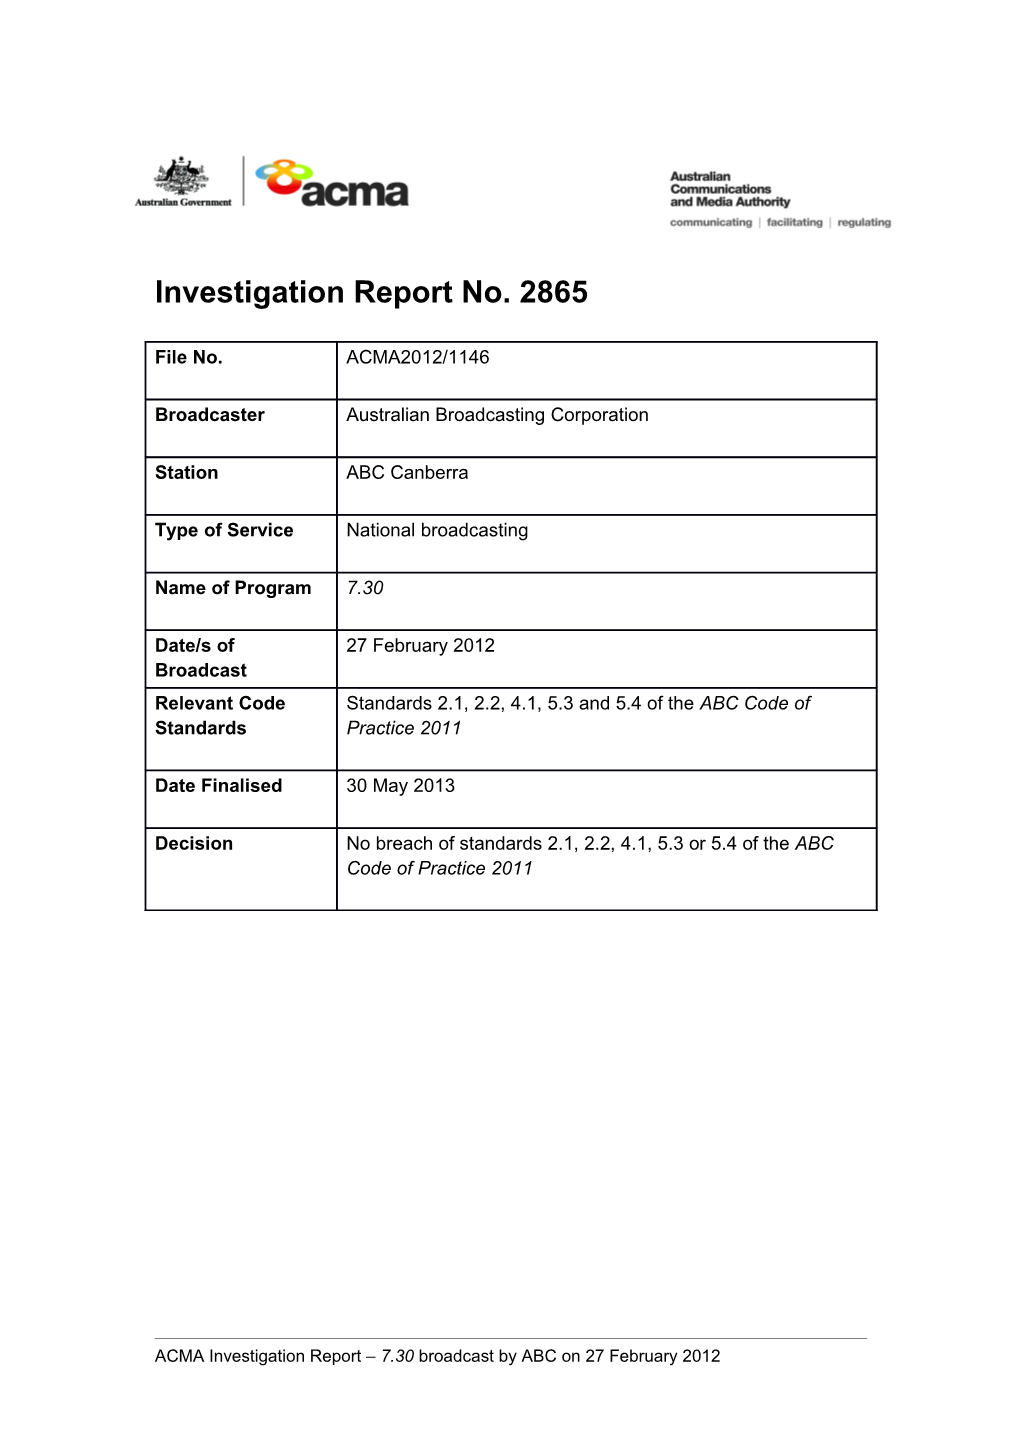 ABC Canberra - ACMA Investigation Report 2865